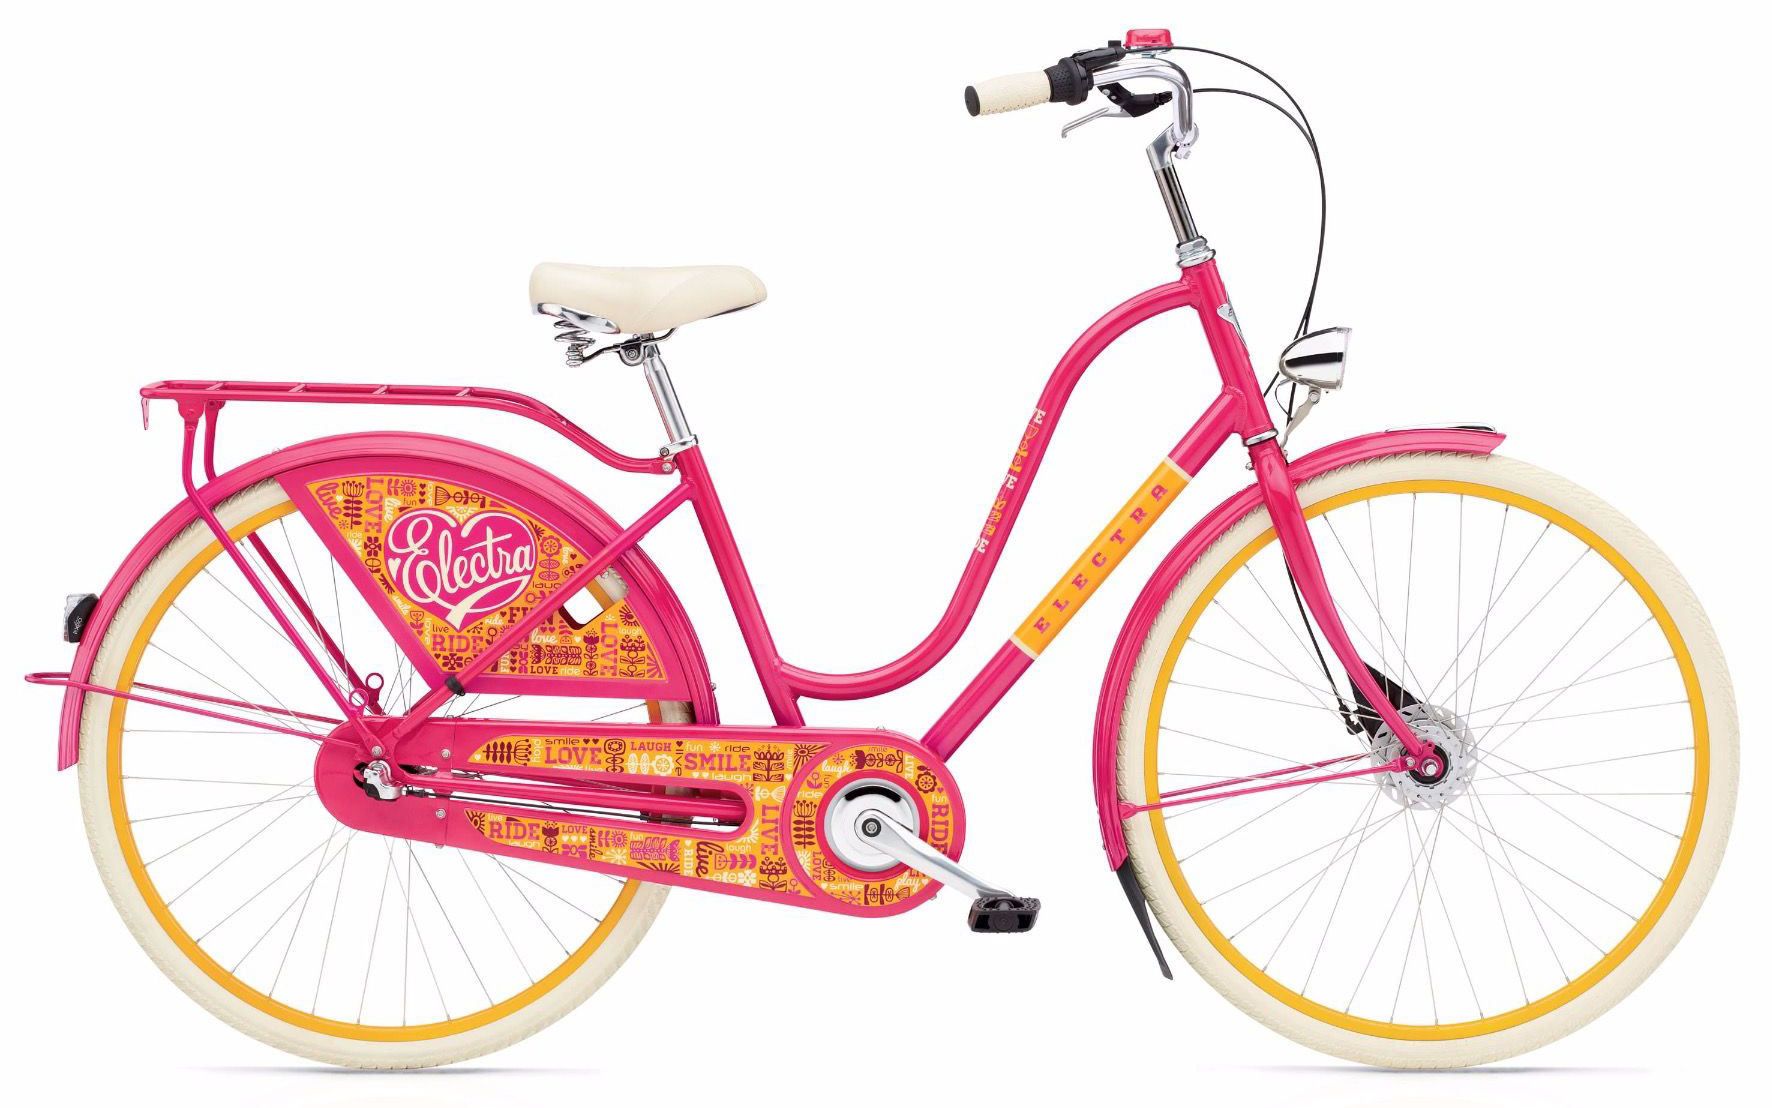  Велосипед Electra Amsterdam Fashion 7i Joyride Ladies 2019